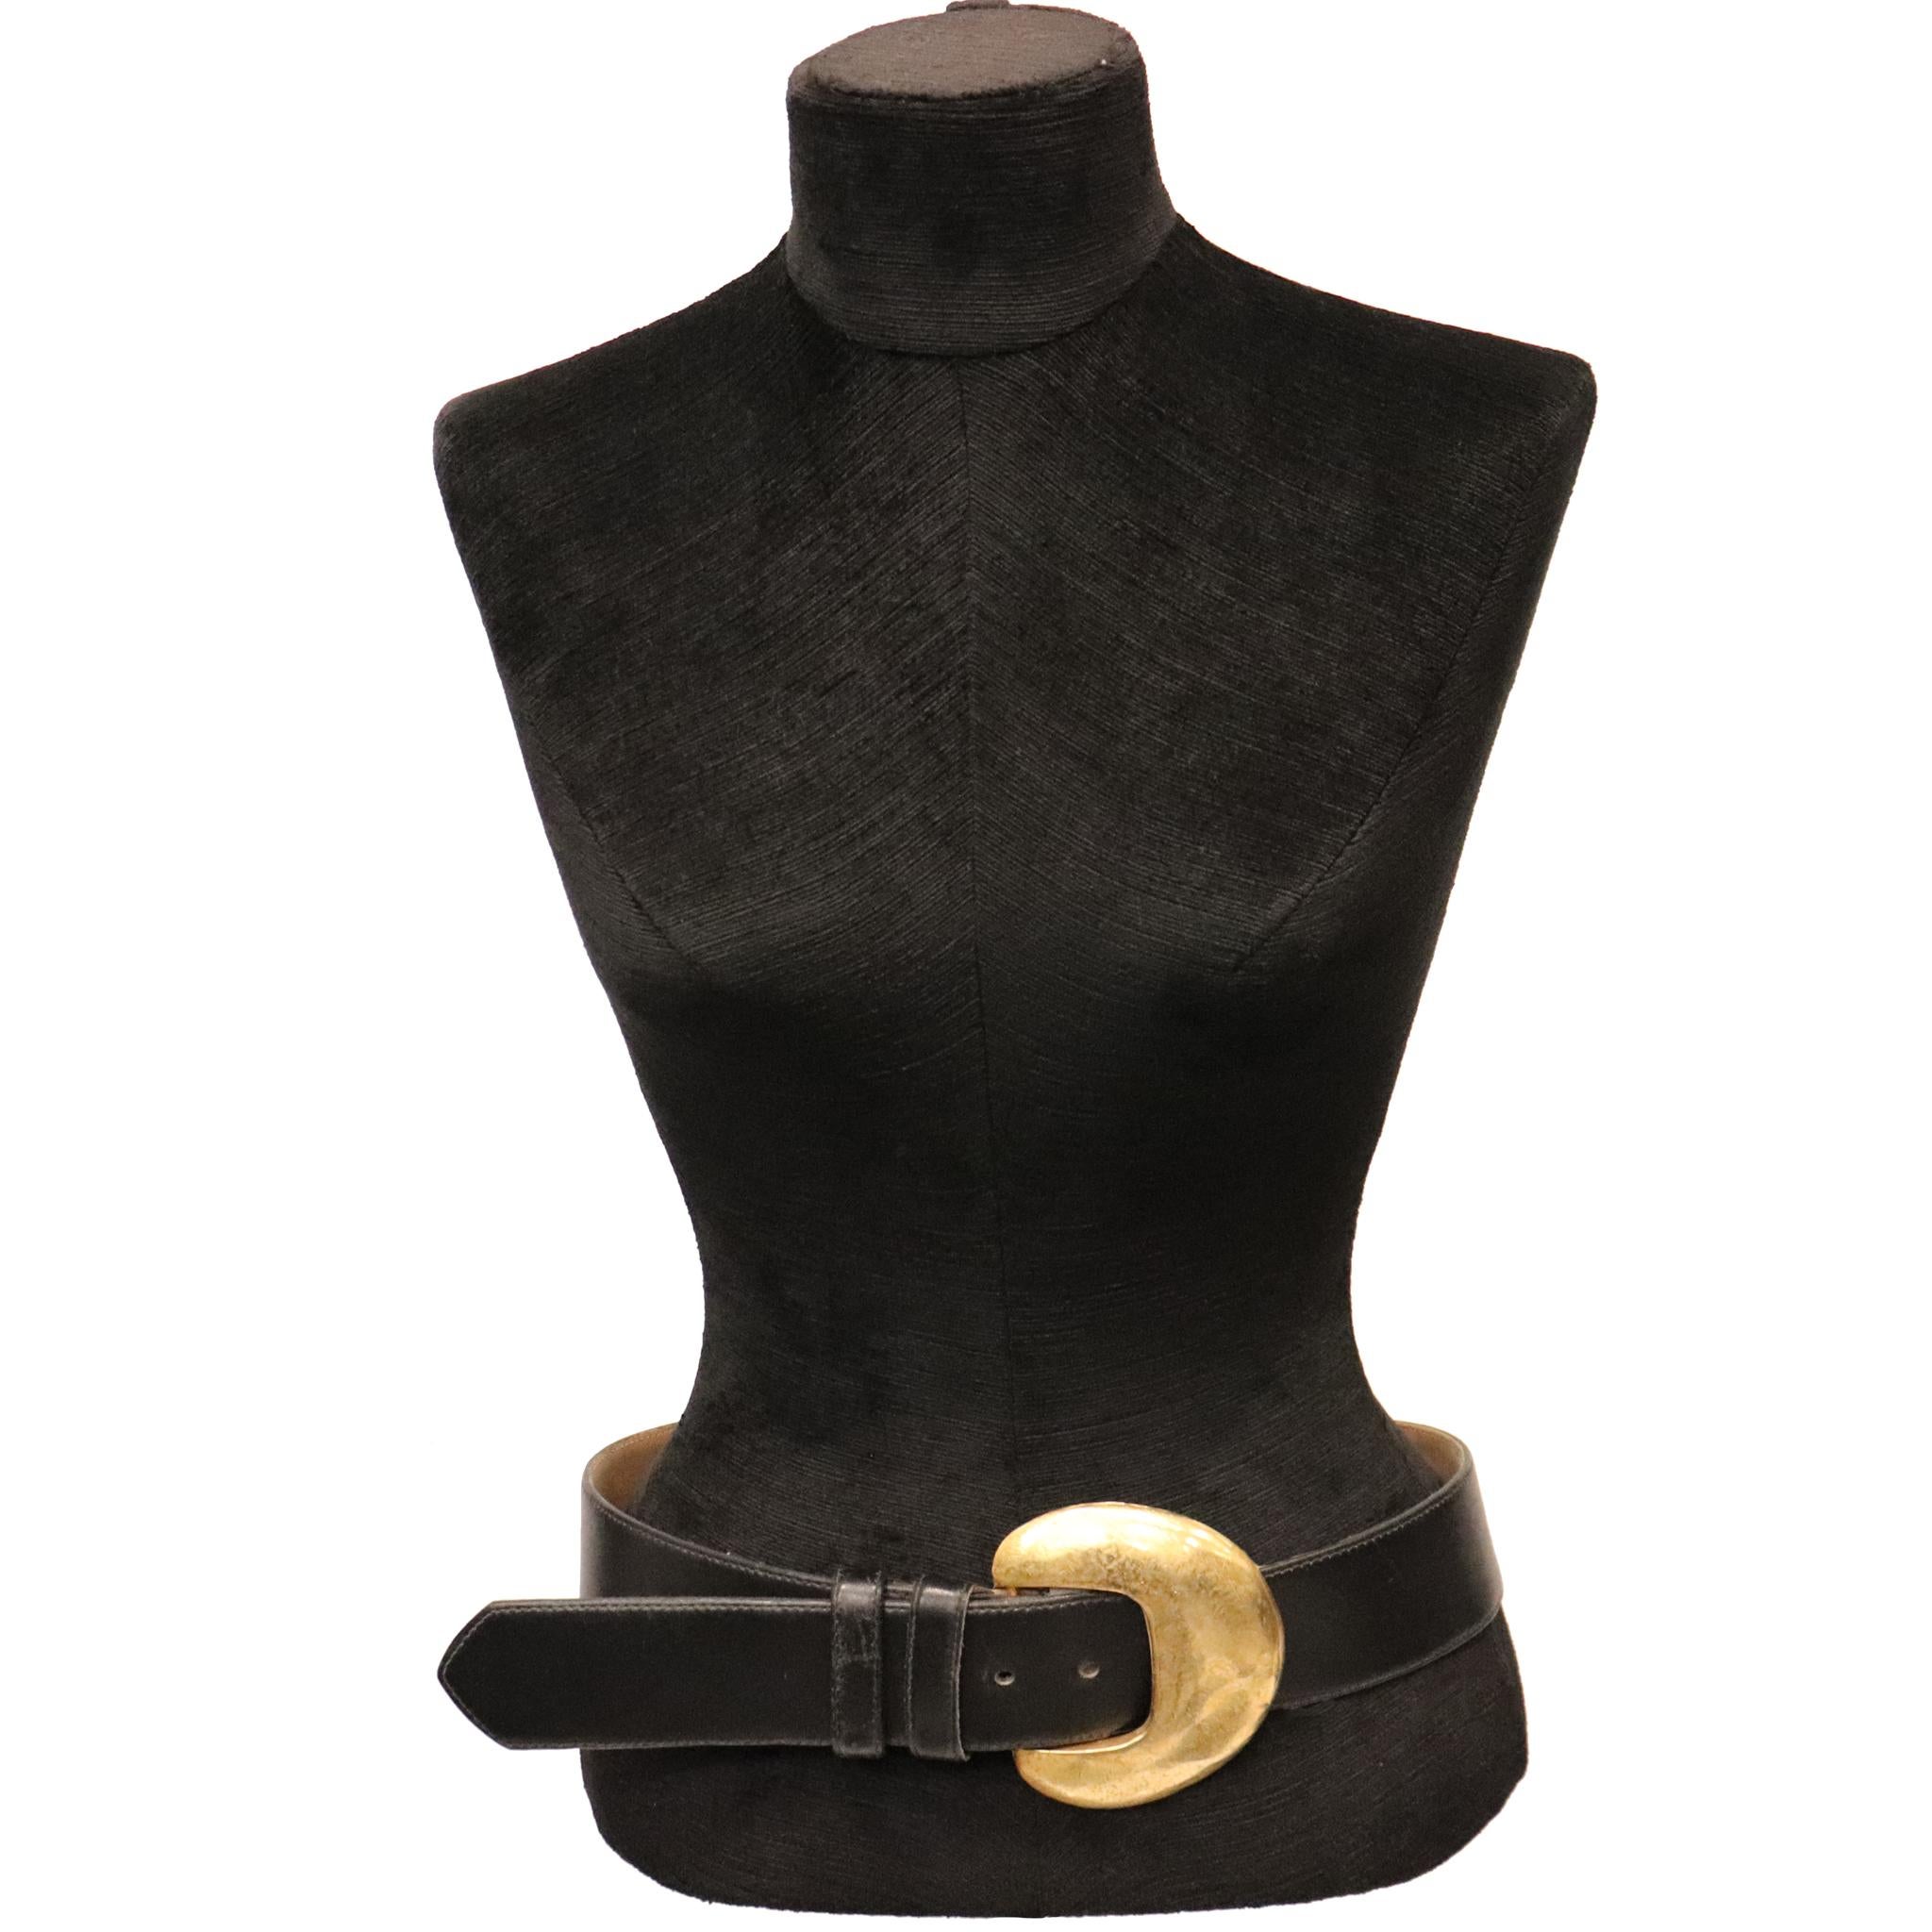 Robert Lee Black Leather Belt W/ Gold Buckle. In excellent condition 

Measurements:

Longest length - 38 inches
Shortest length - 29 inches
Width - 1.9 inches